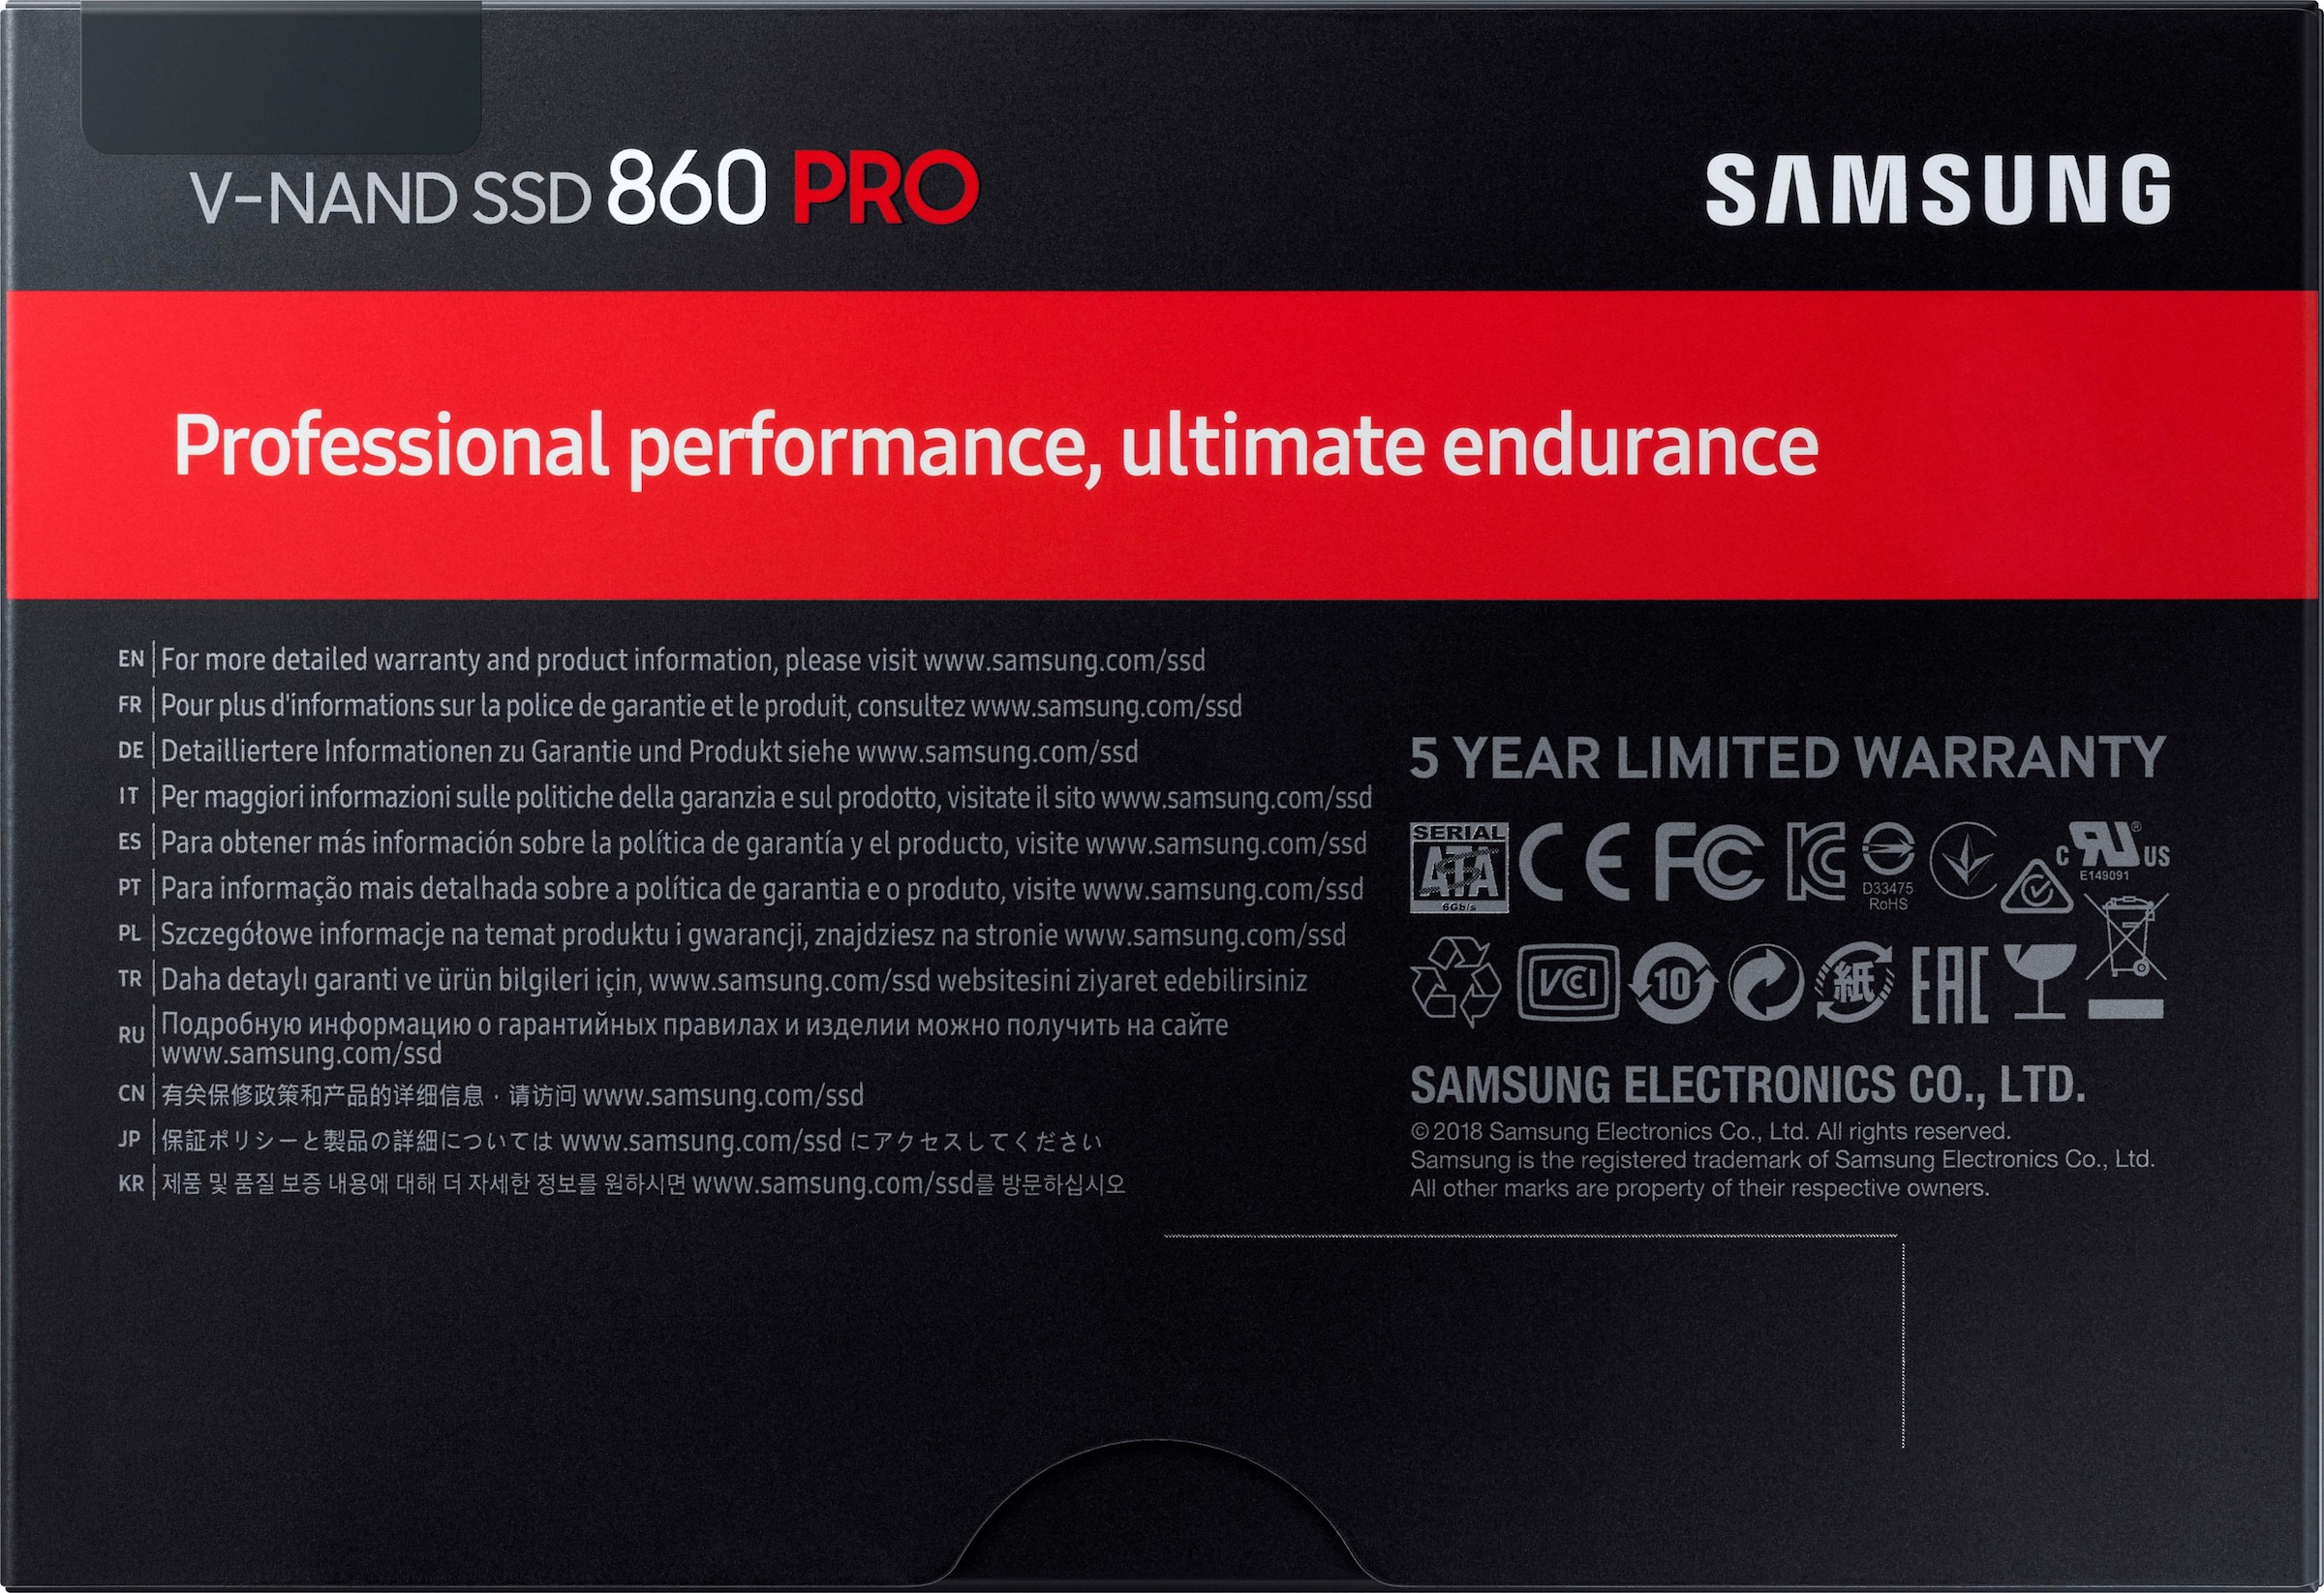 Samsung interne SSD »860 PRO SSD«, 2,5 Zoll, Anschluss SATA III